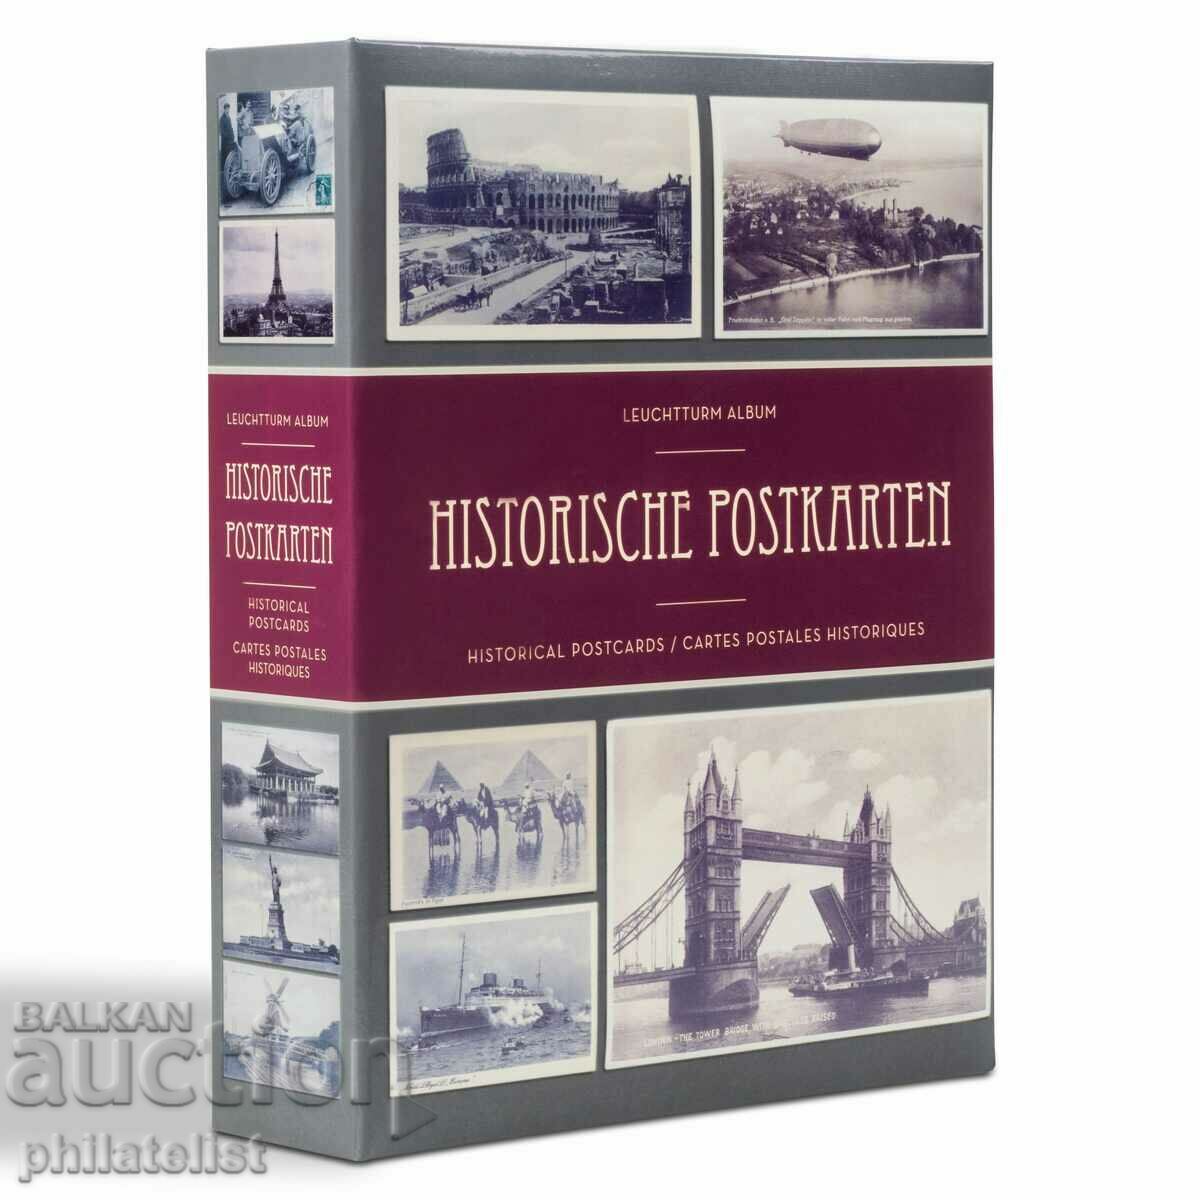 Leuchtturm album for 200 postcards